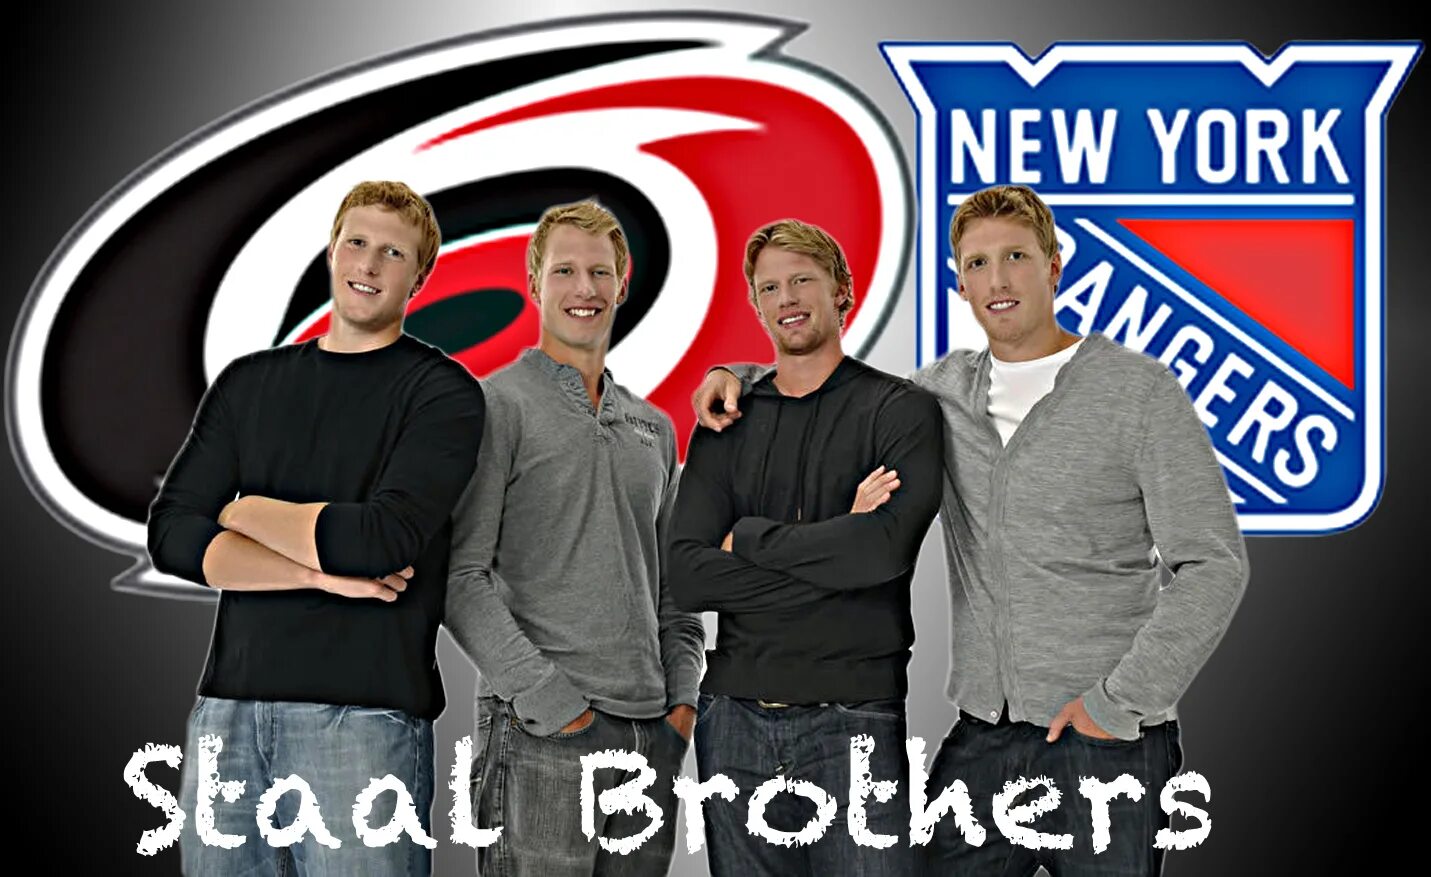 How many brothers. Staal brothers. Братья Стаал НХЛ. Братья Стаал хоккеисты. Три брата Стаал.